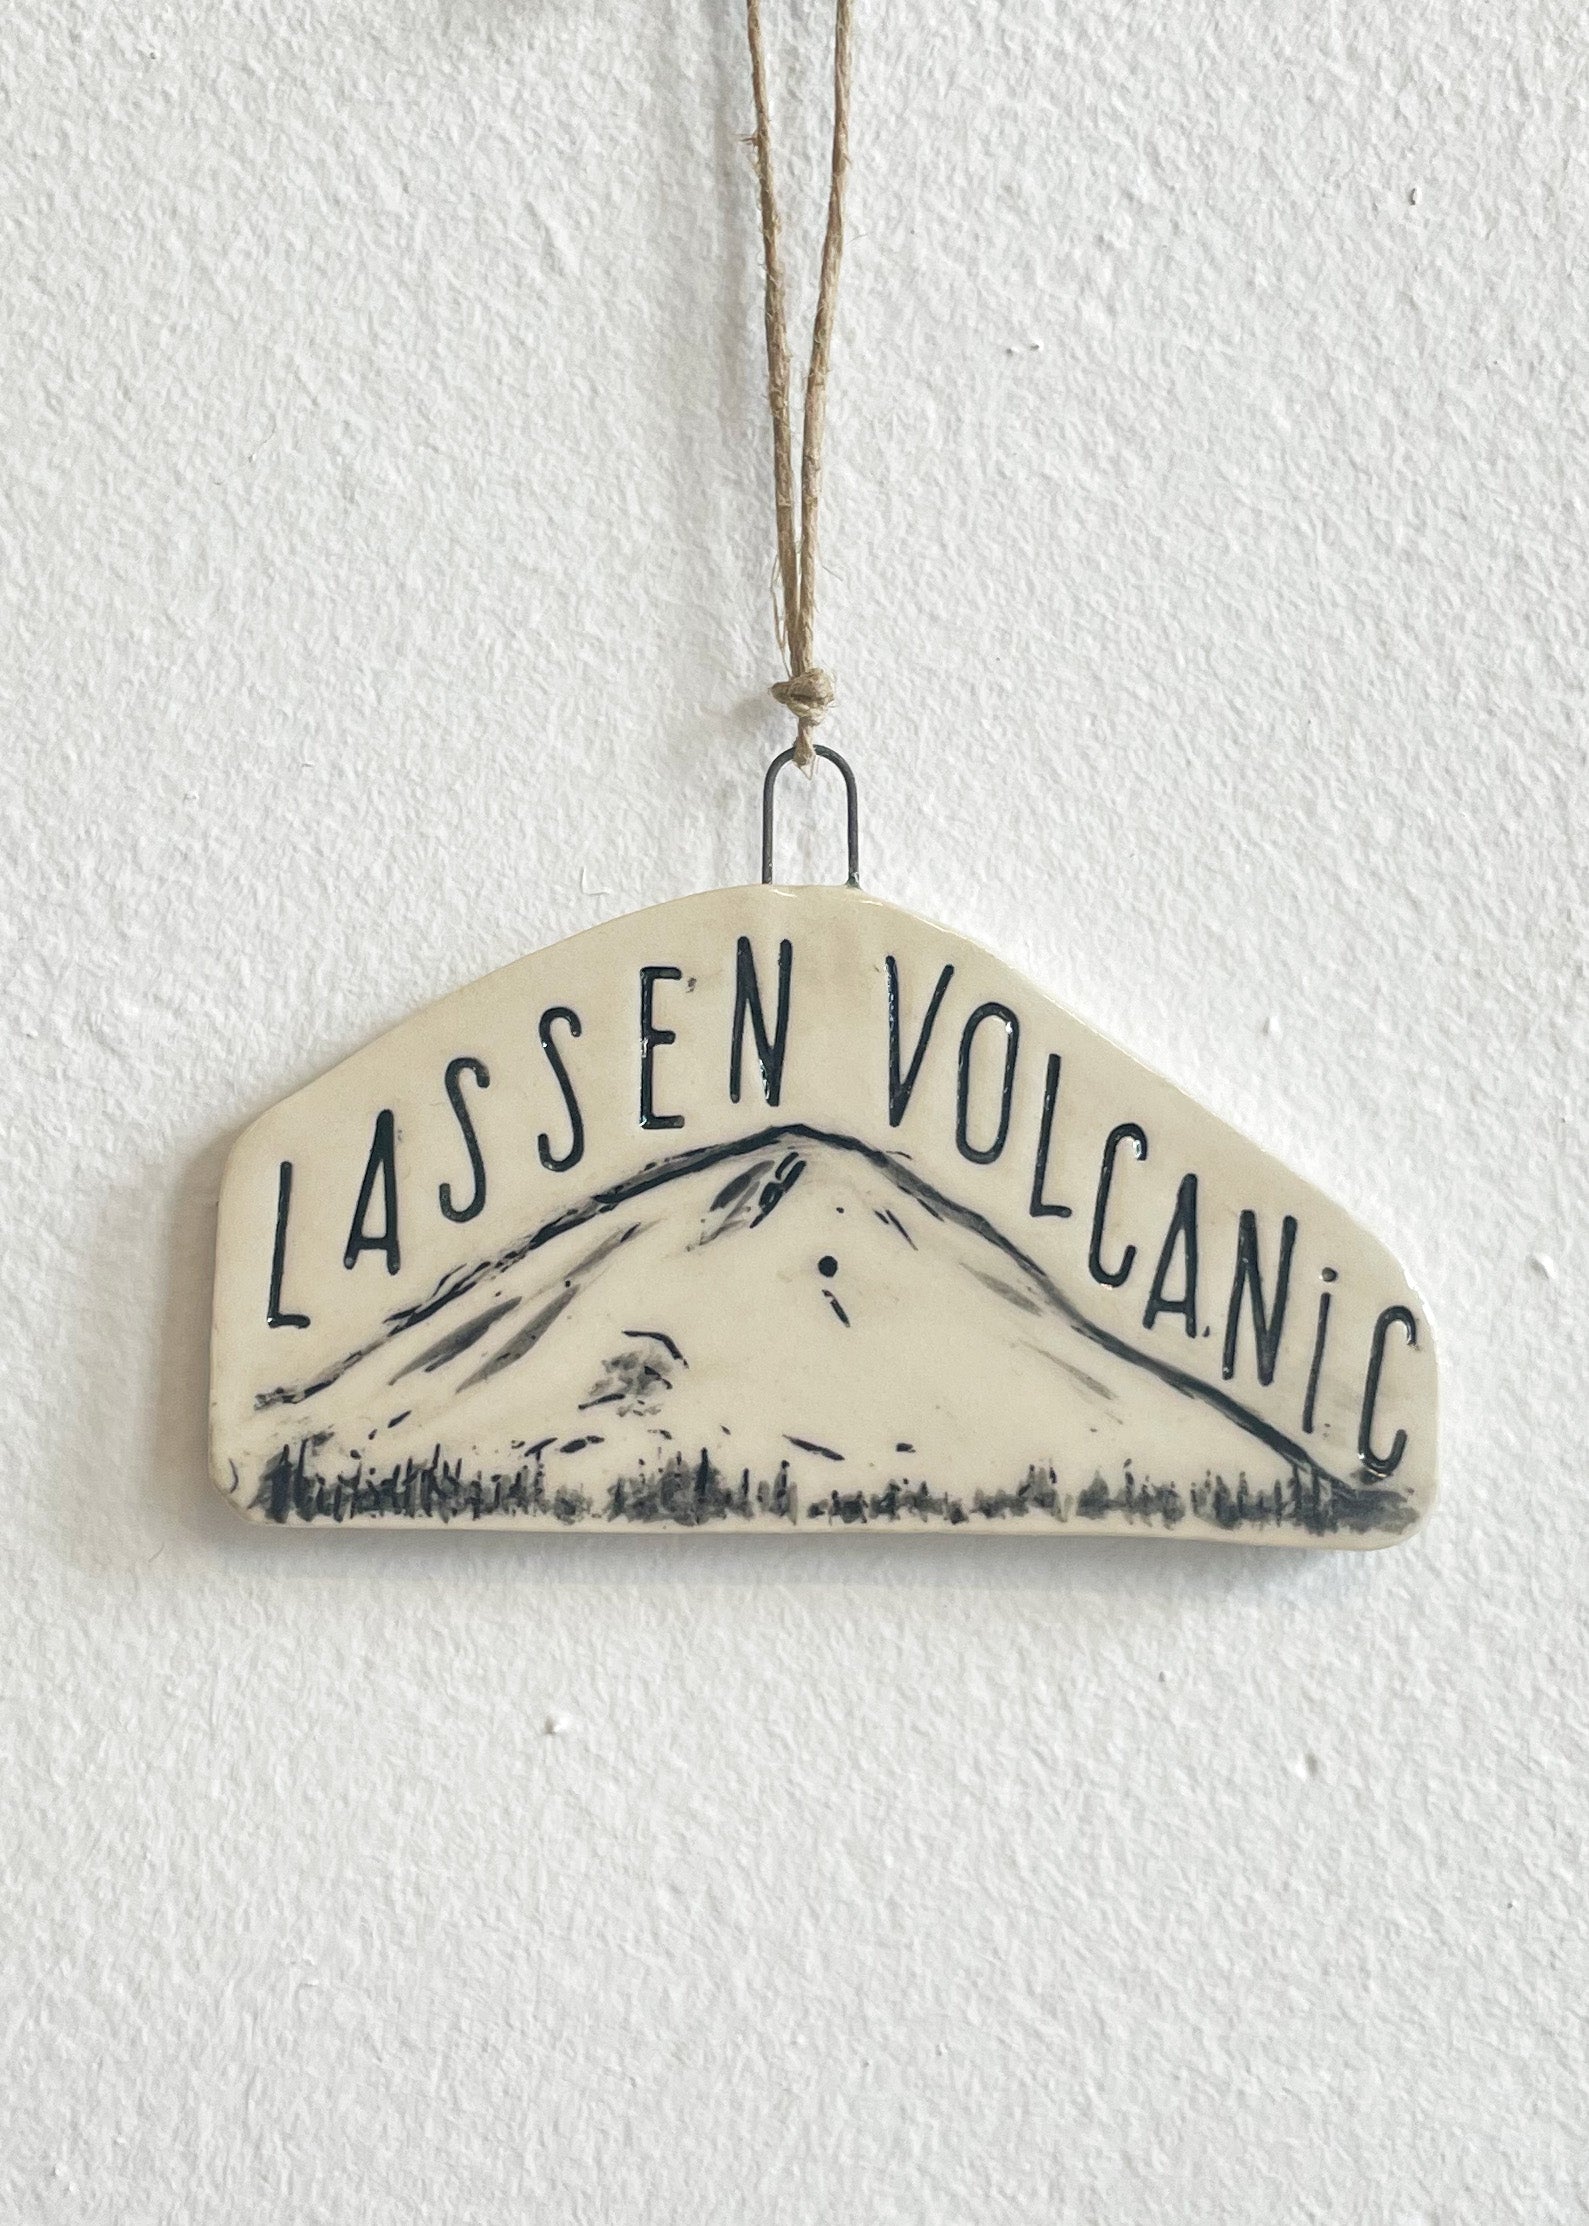 Lassen Volcanic Ornament